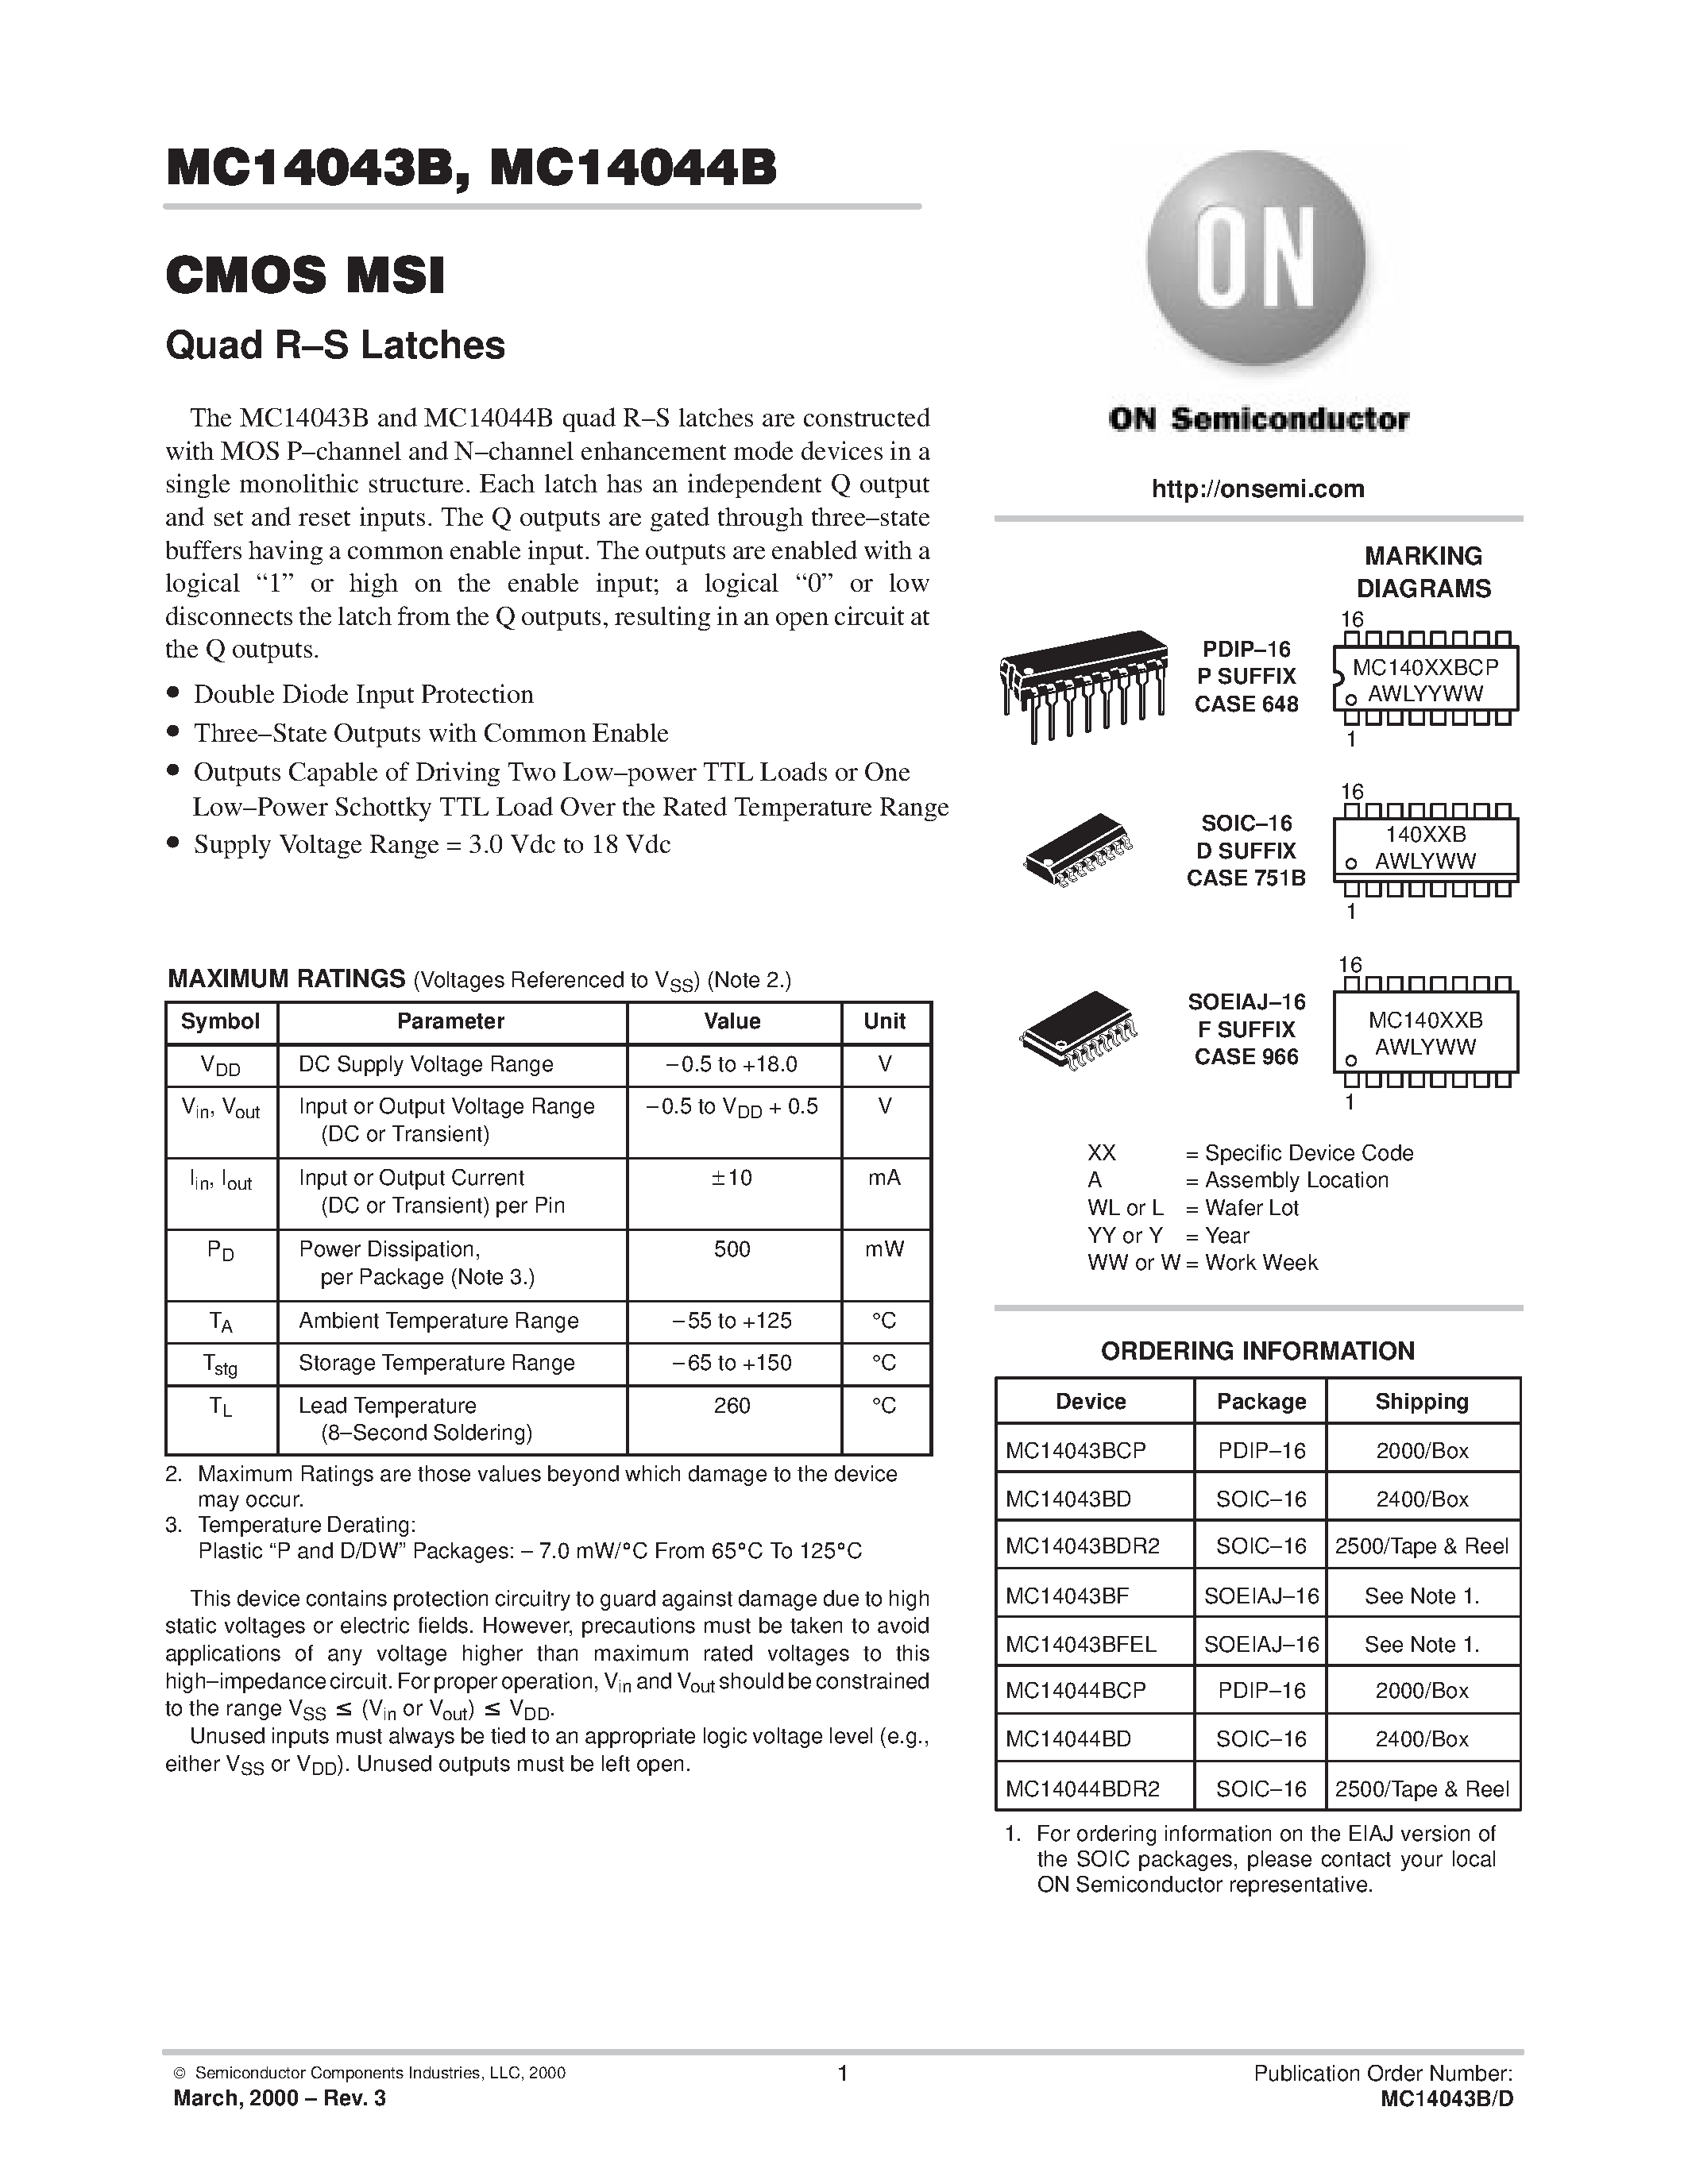 Даташит MC14044BD - CMOS MSI(Quad R-S Latches) страница 1